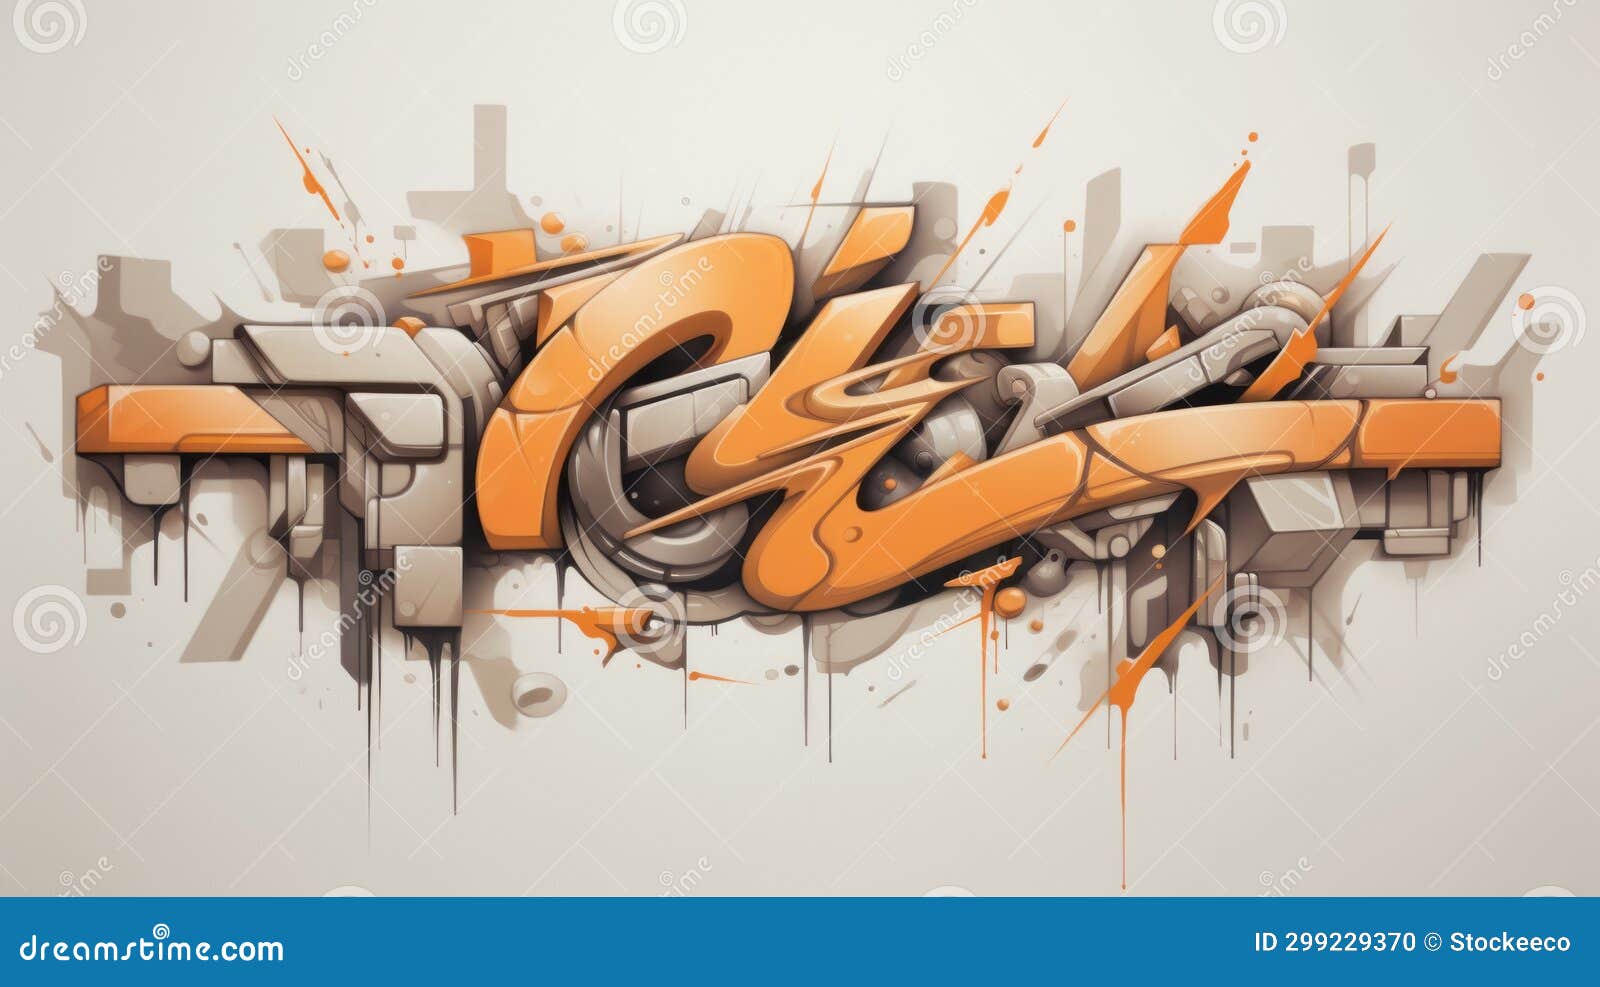 Graffiti Style Design and Art Wallpaper - Dark White and Light Orange ...